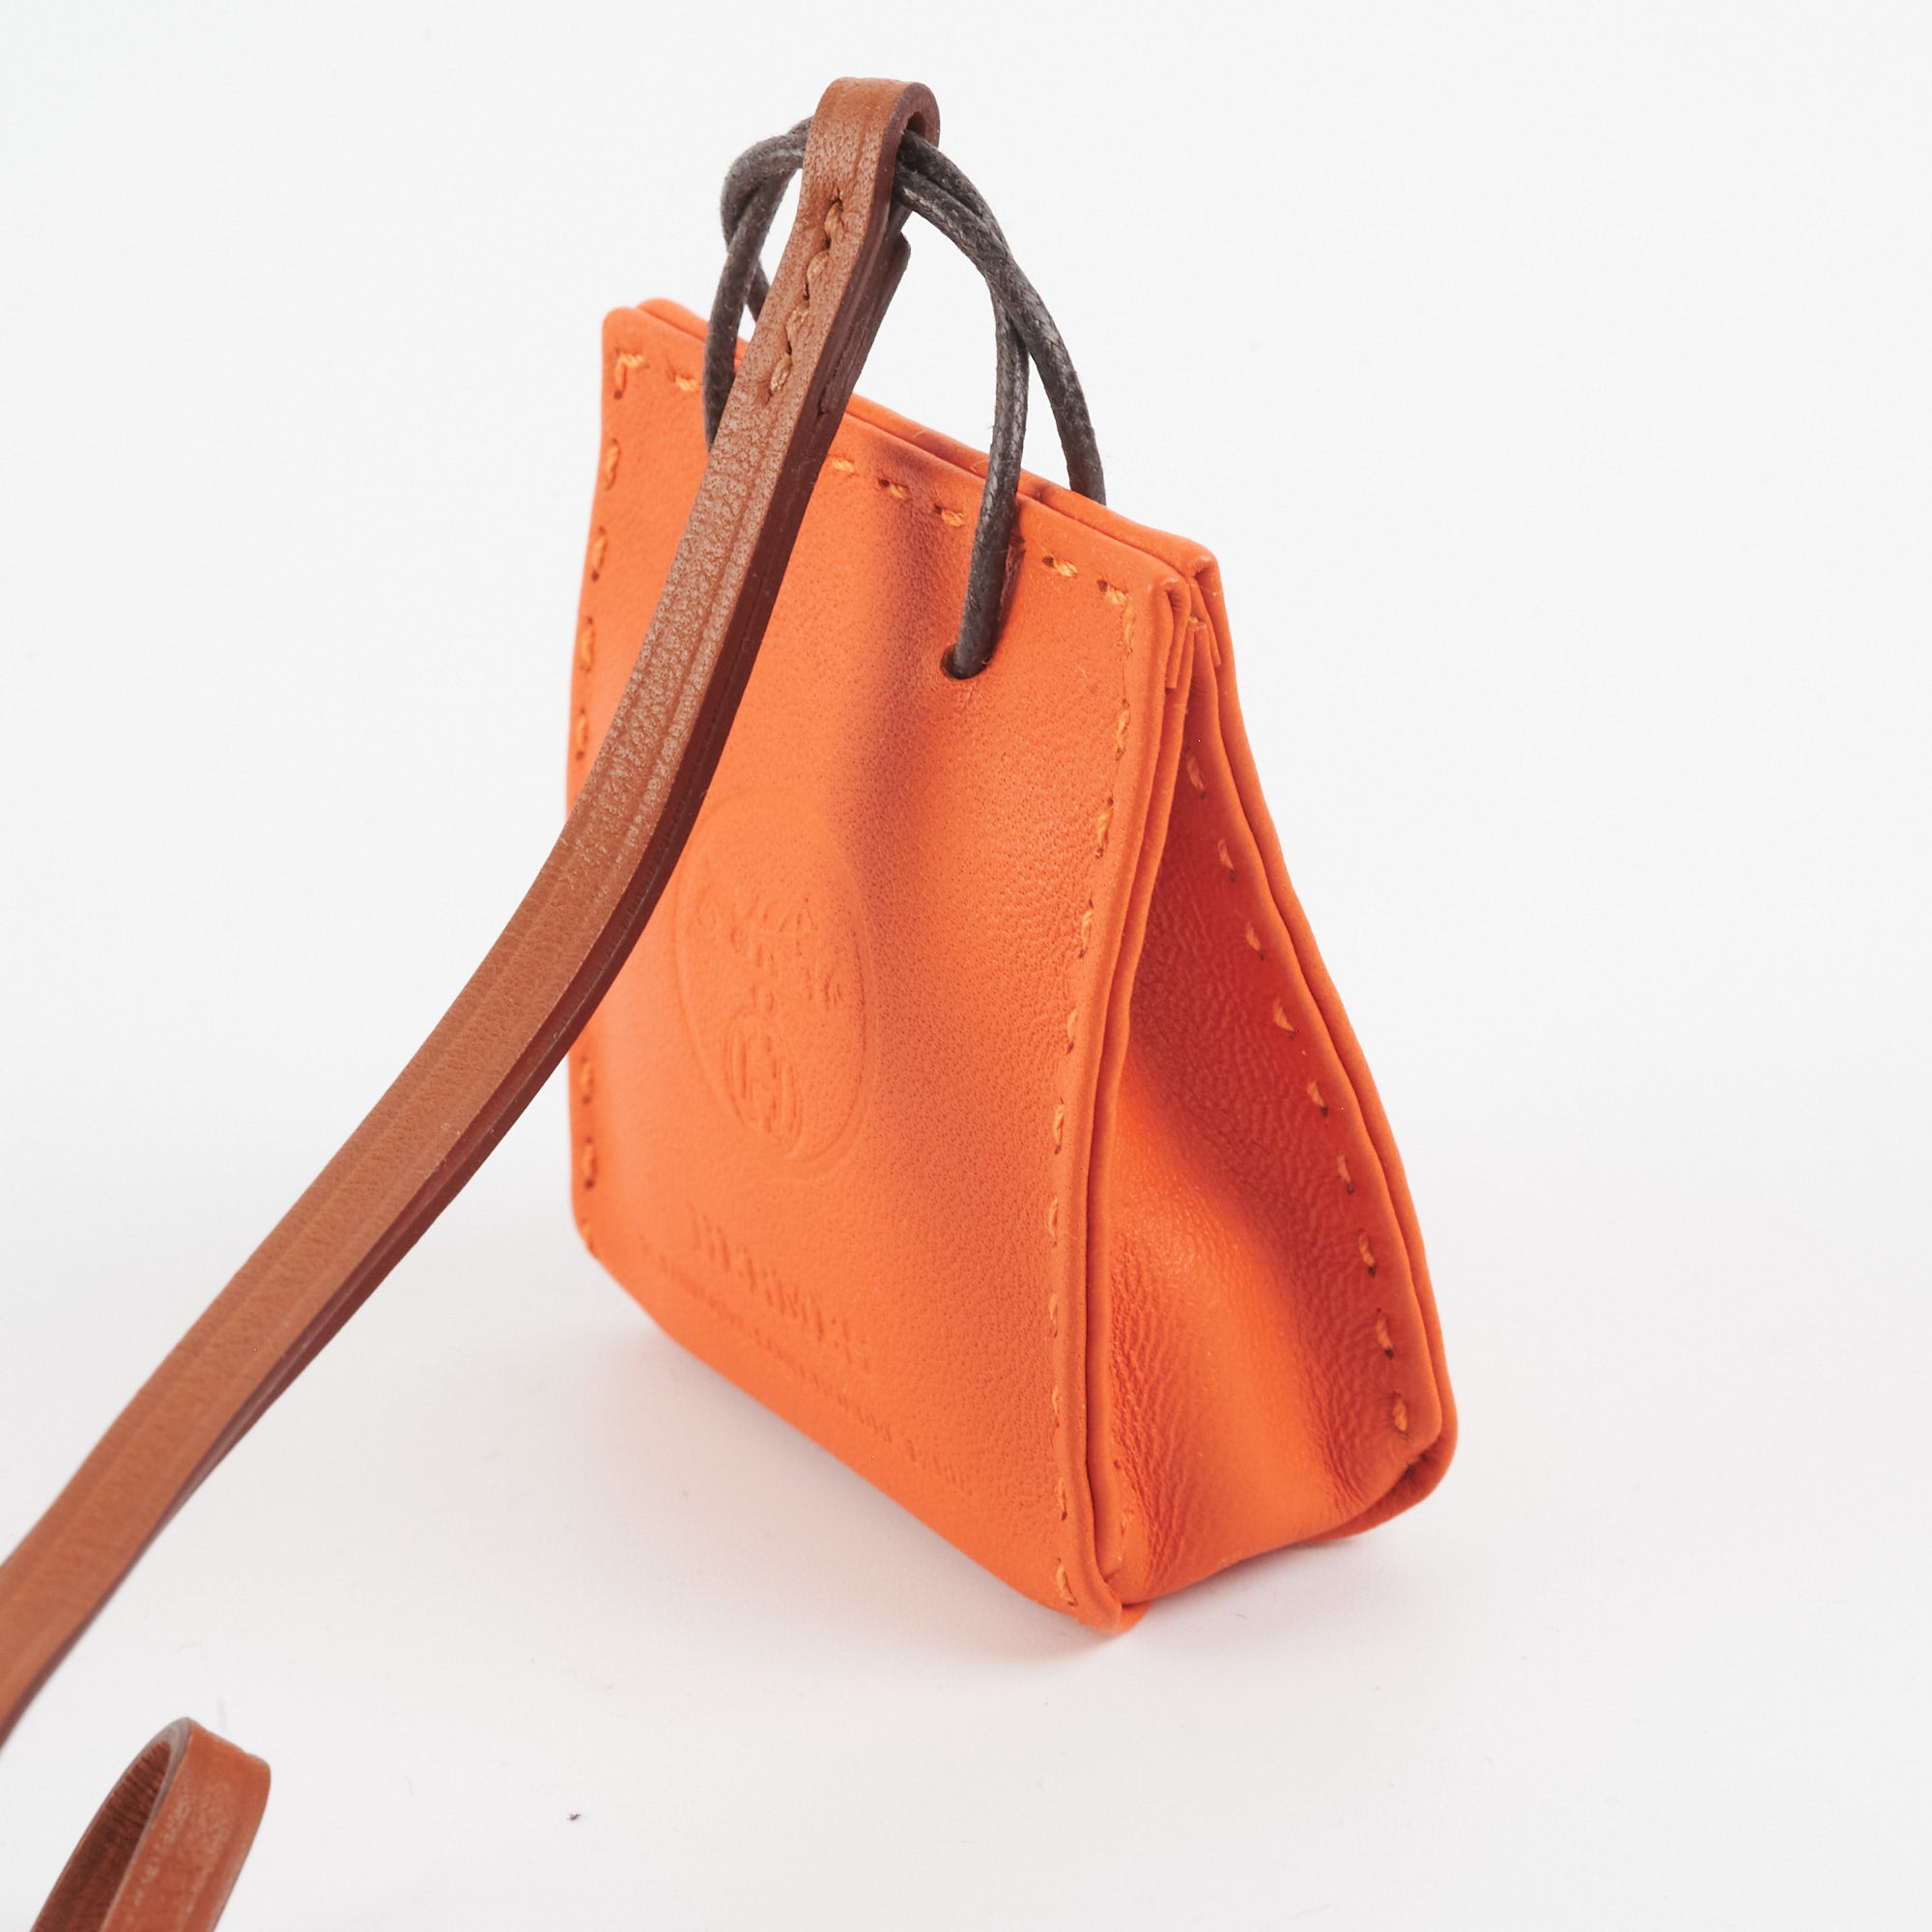 HERMES Sac Orange Shopper Bag Charm Y AM Accessories ORN Women's